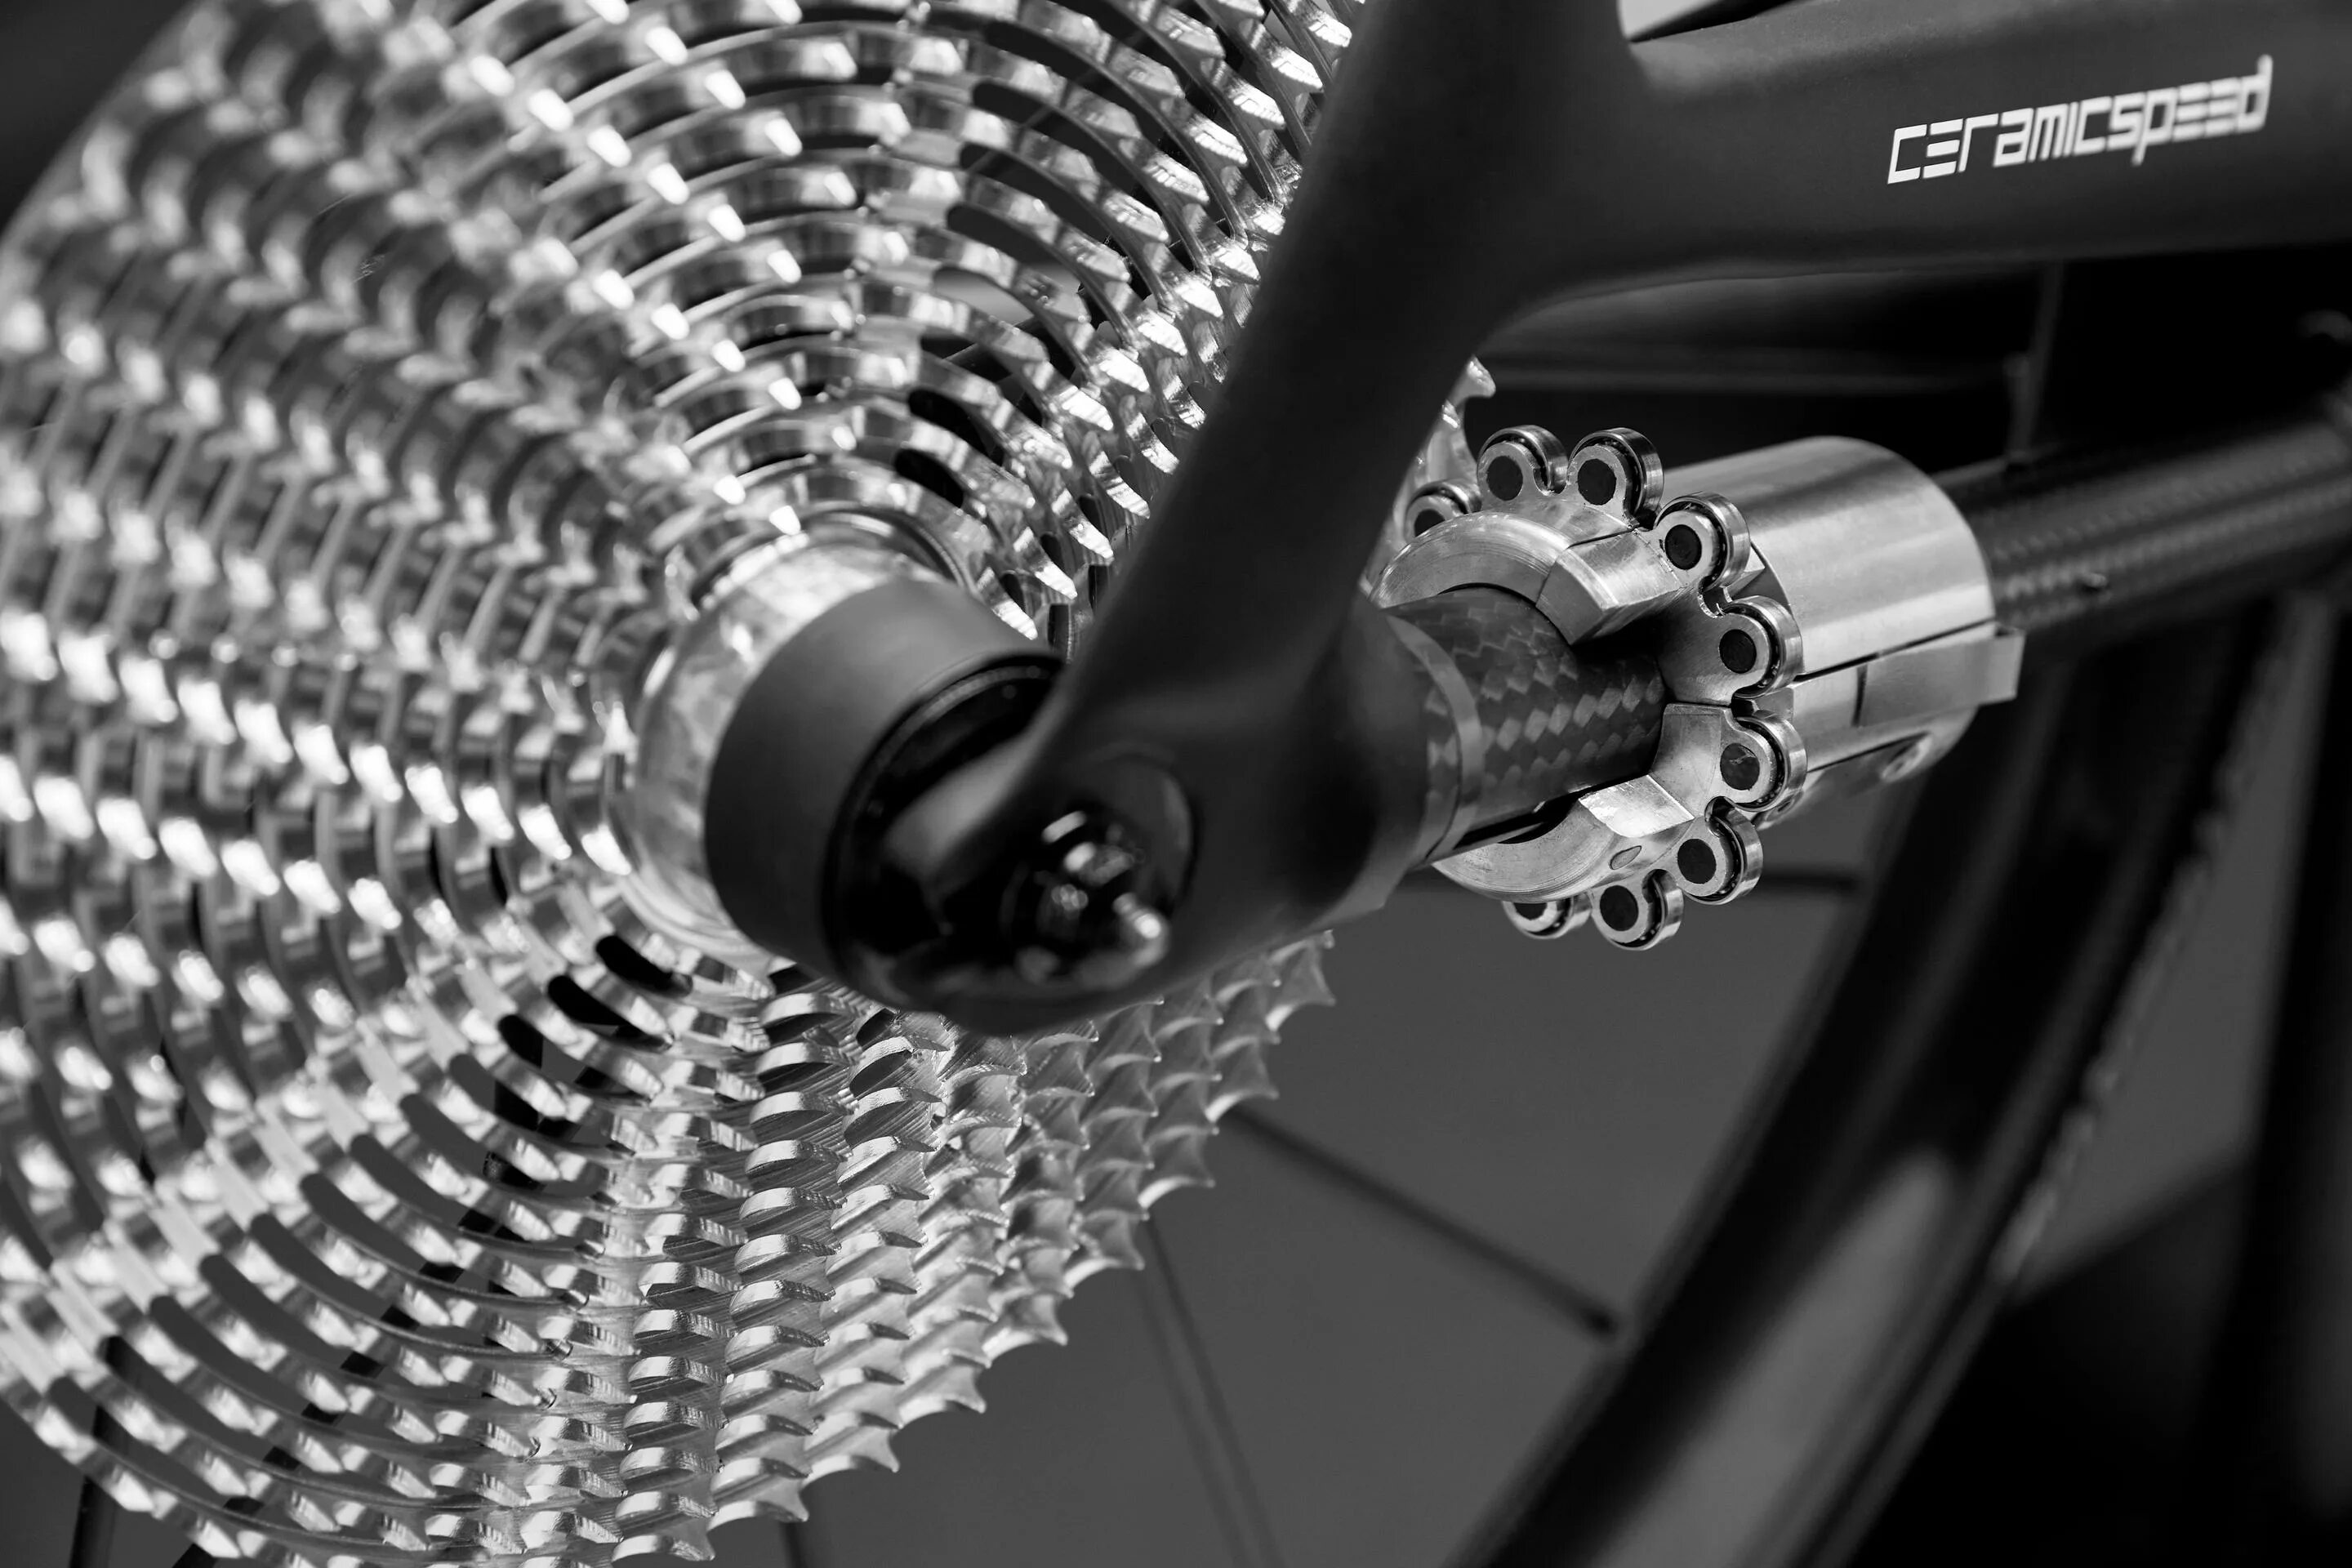 Ceramic Speed Drivetrain велосипеда. CERAMICSPEED Driven велосипед. Керамик СПИД трансмиссия. CERAMICSPEED переключатель. Speed bike